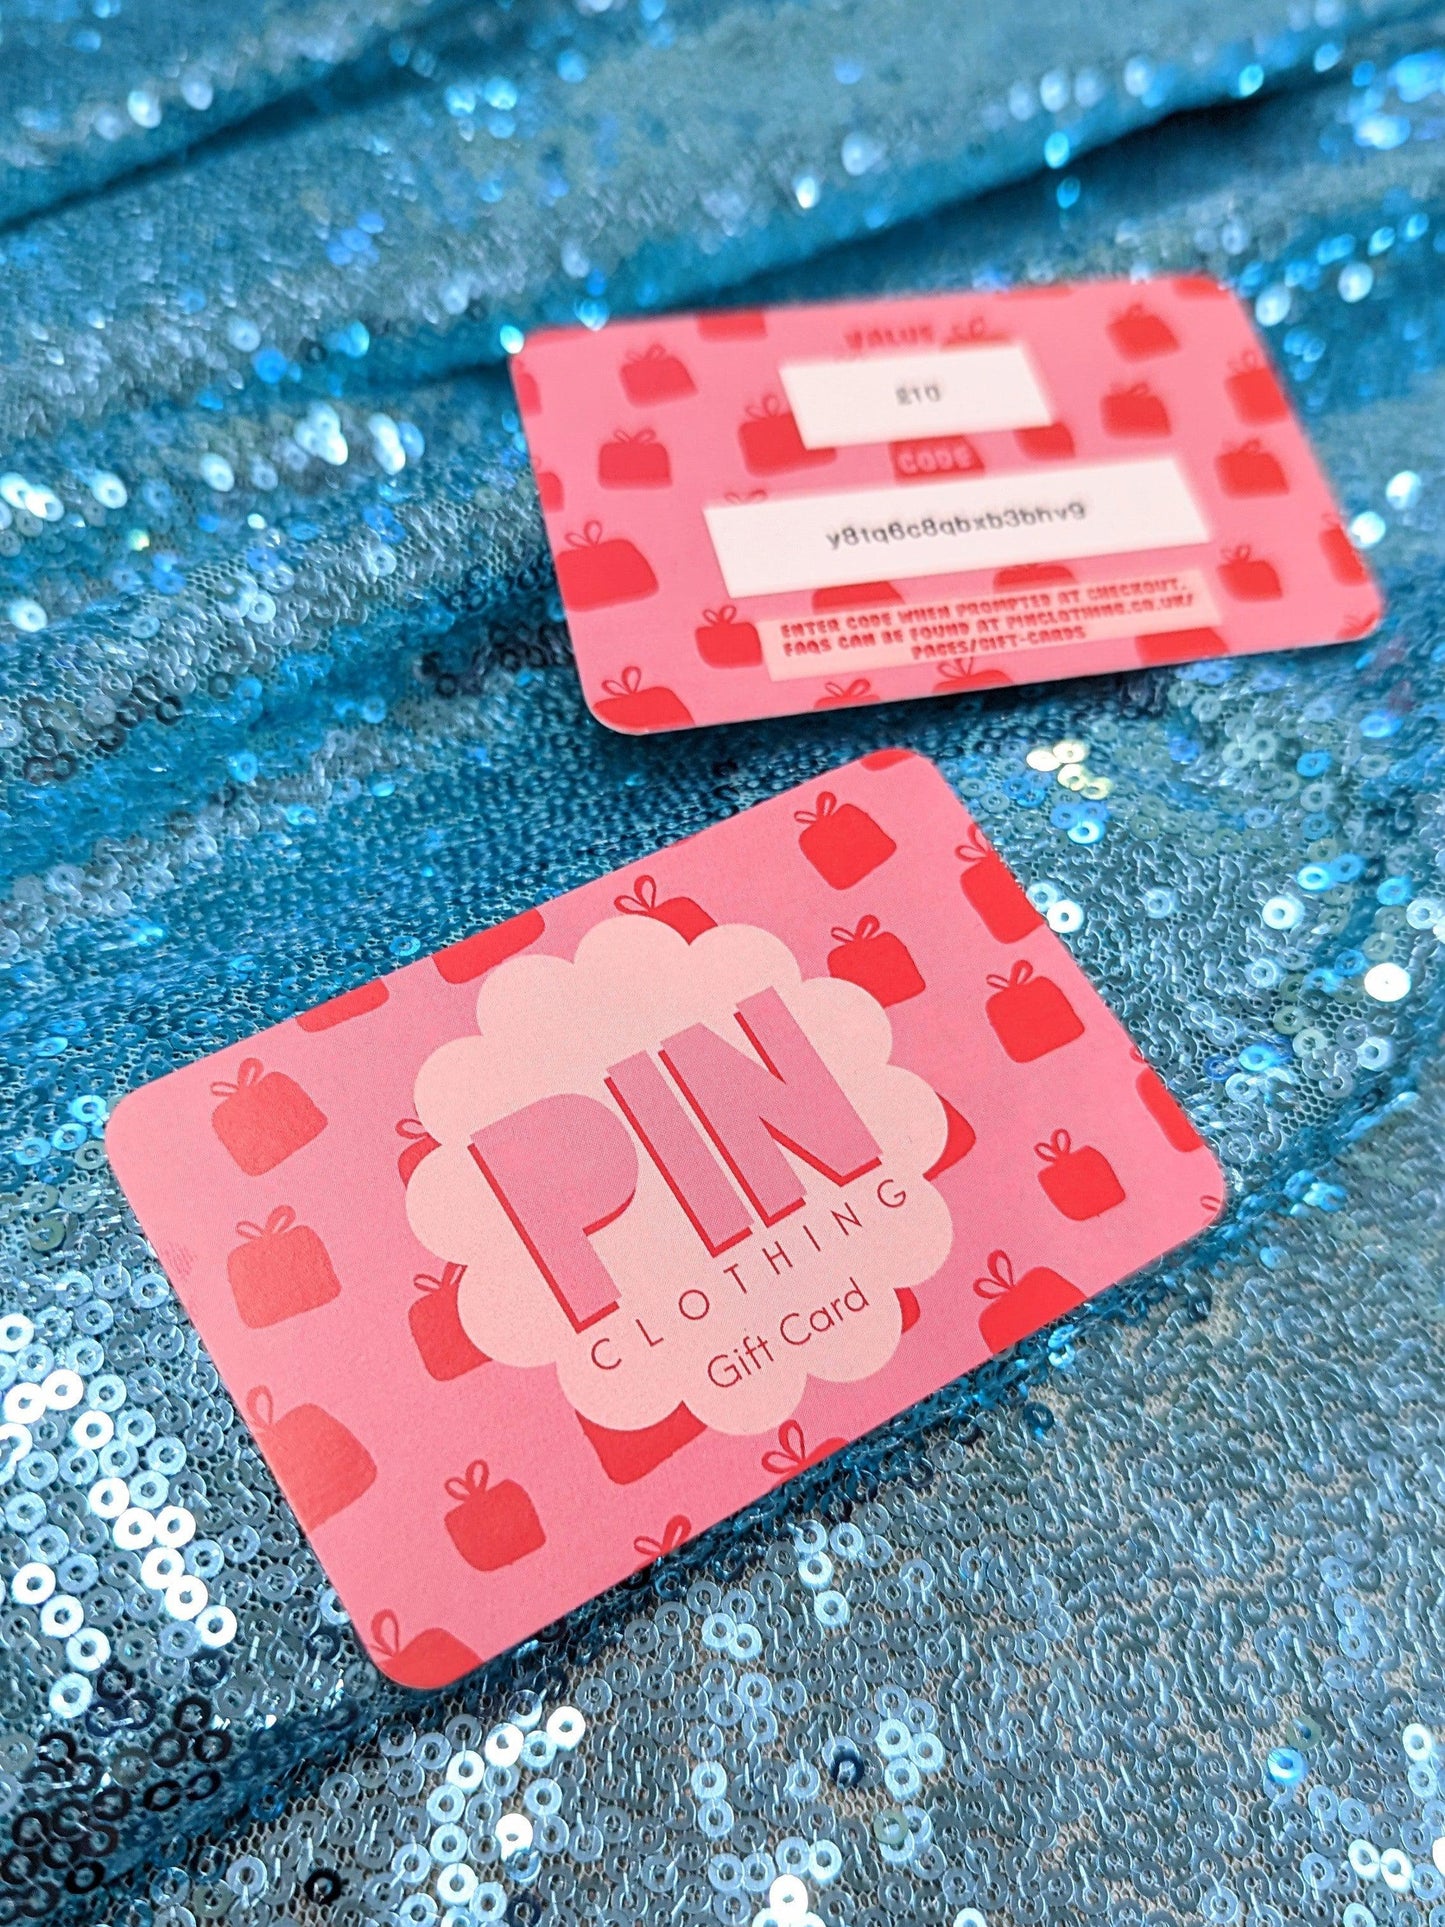 Physical Pin Clothing Gift Card-Pin Clothing-pinclothing.co.uk